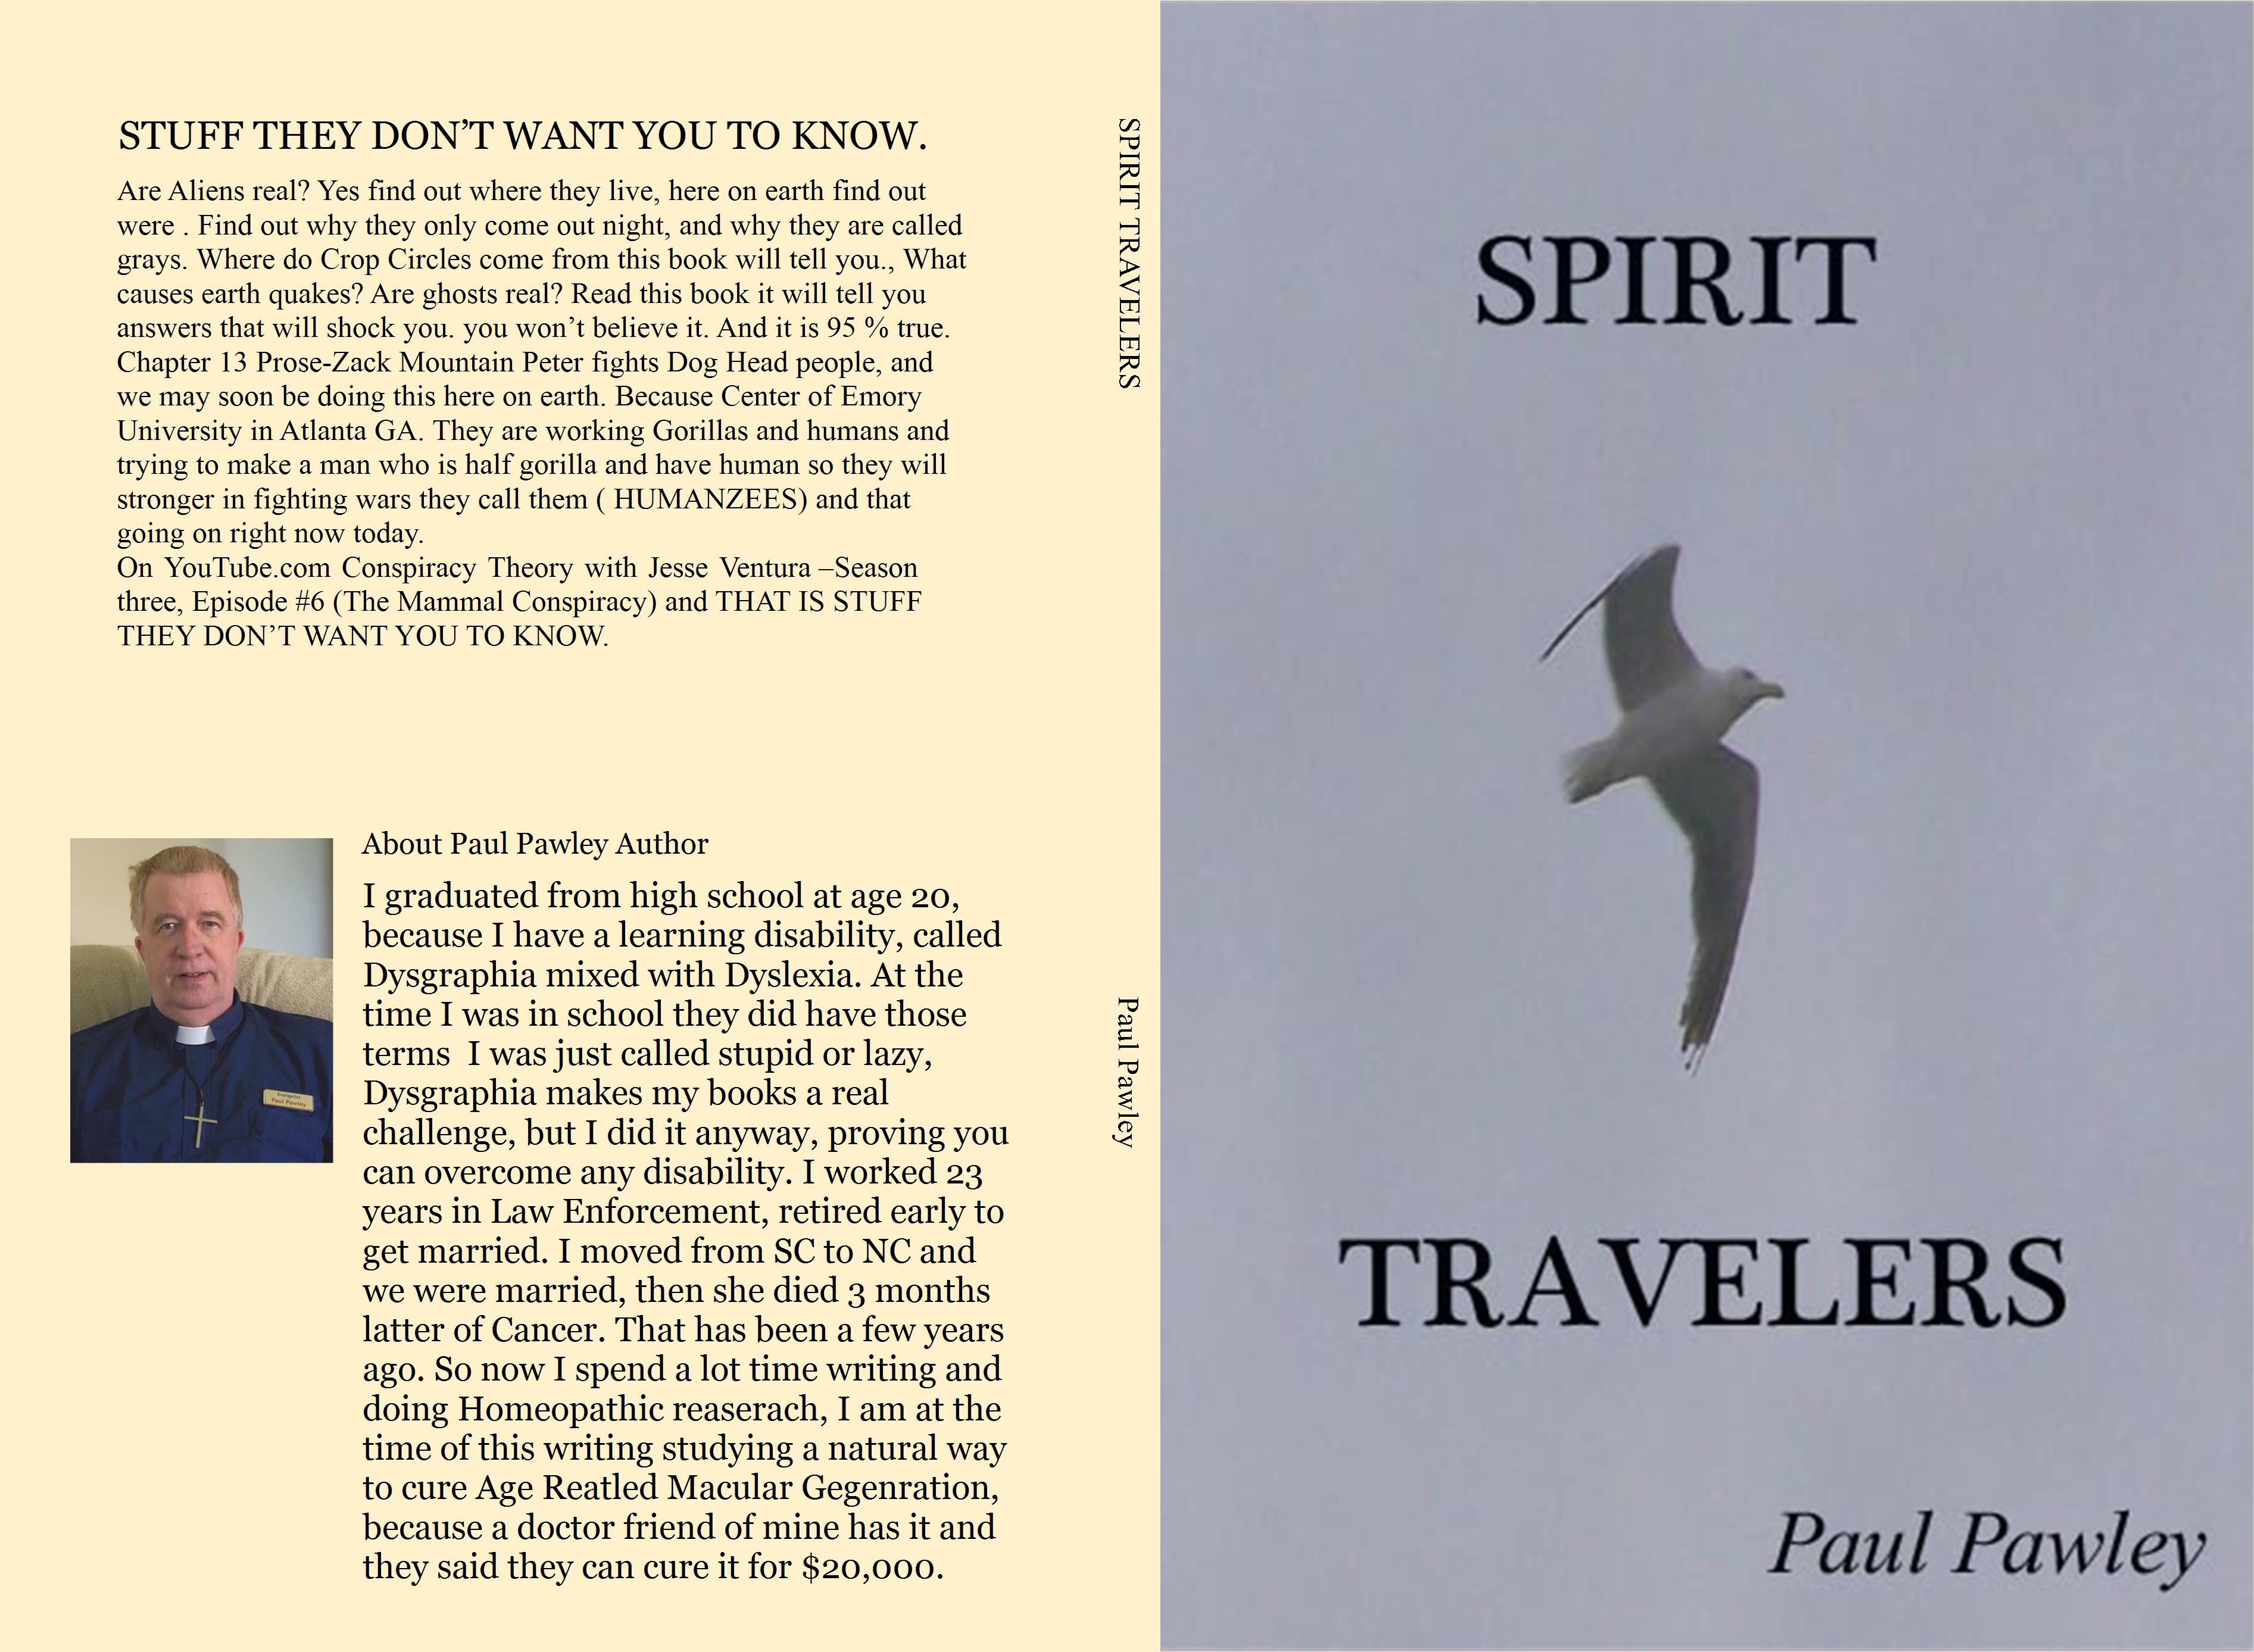 SPIRIT TRAVELERS cover image